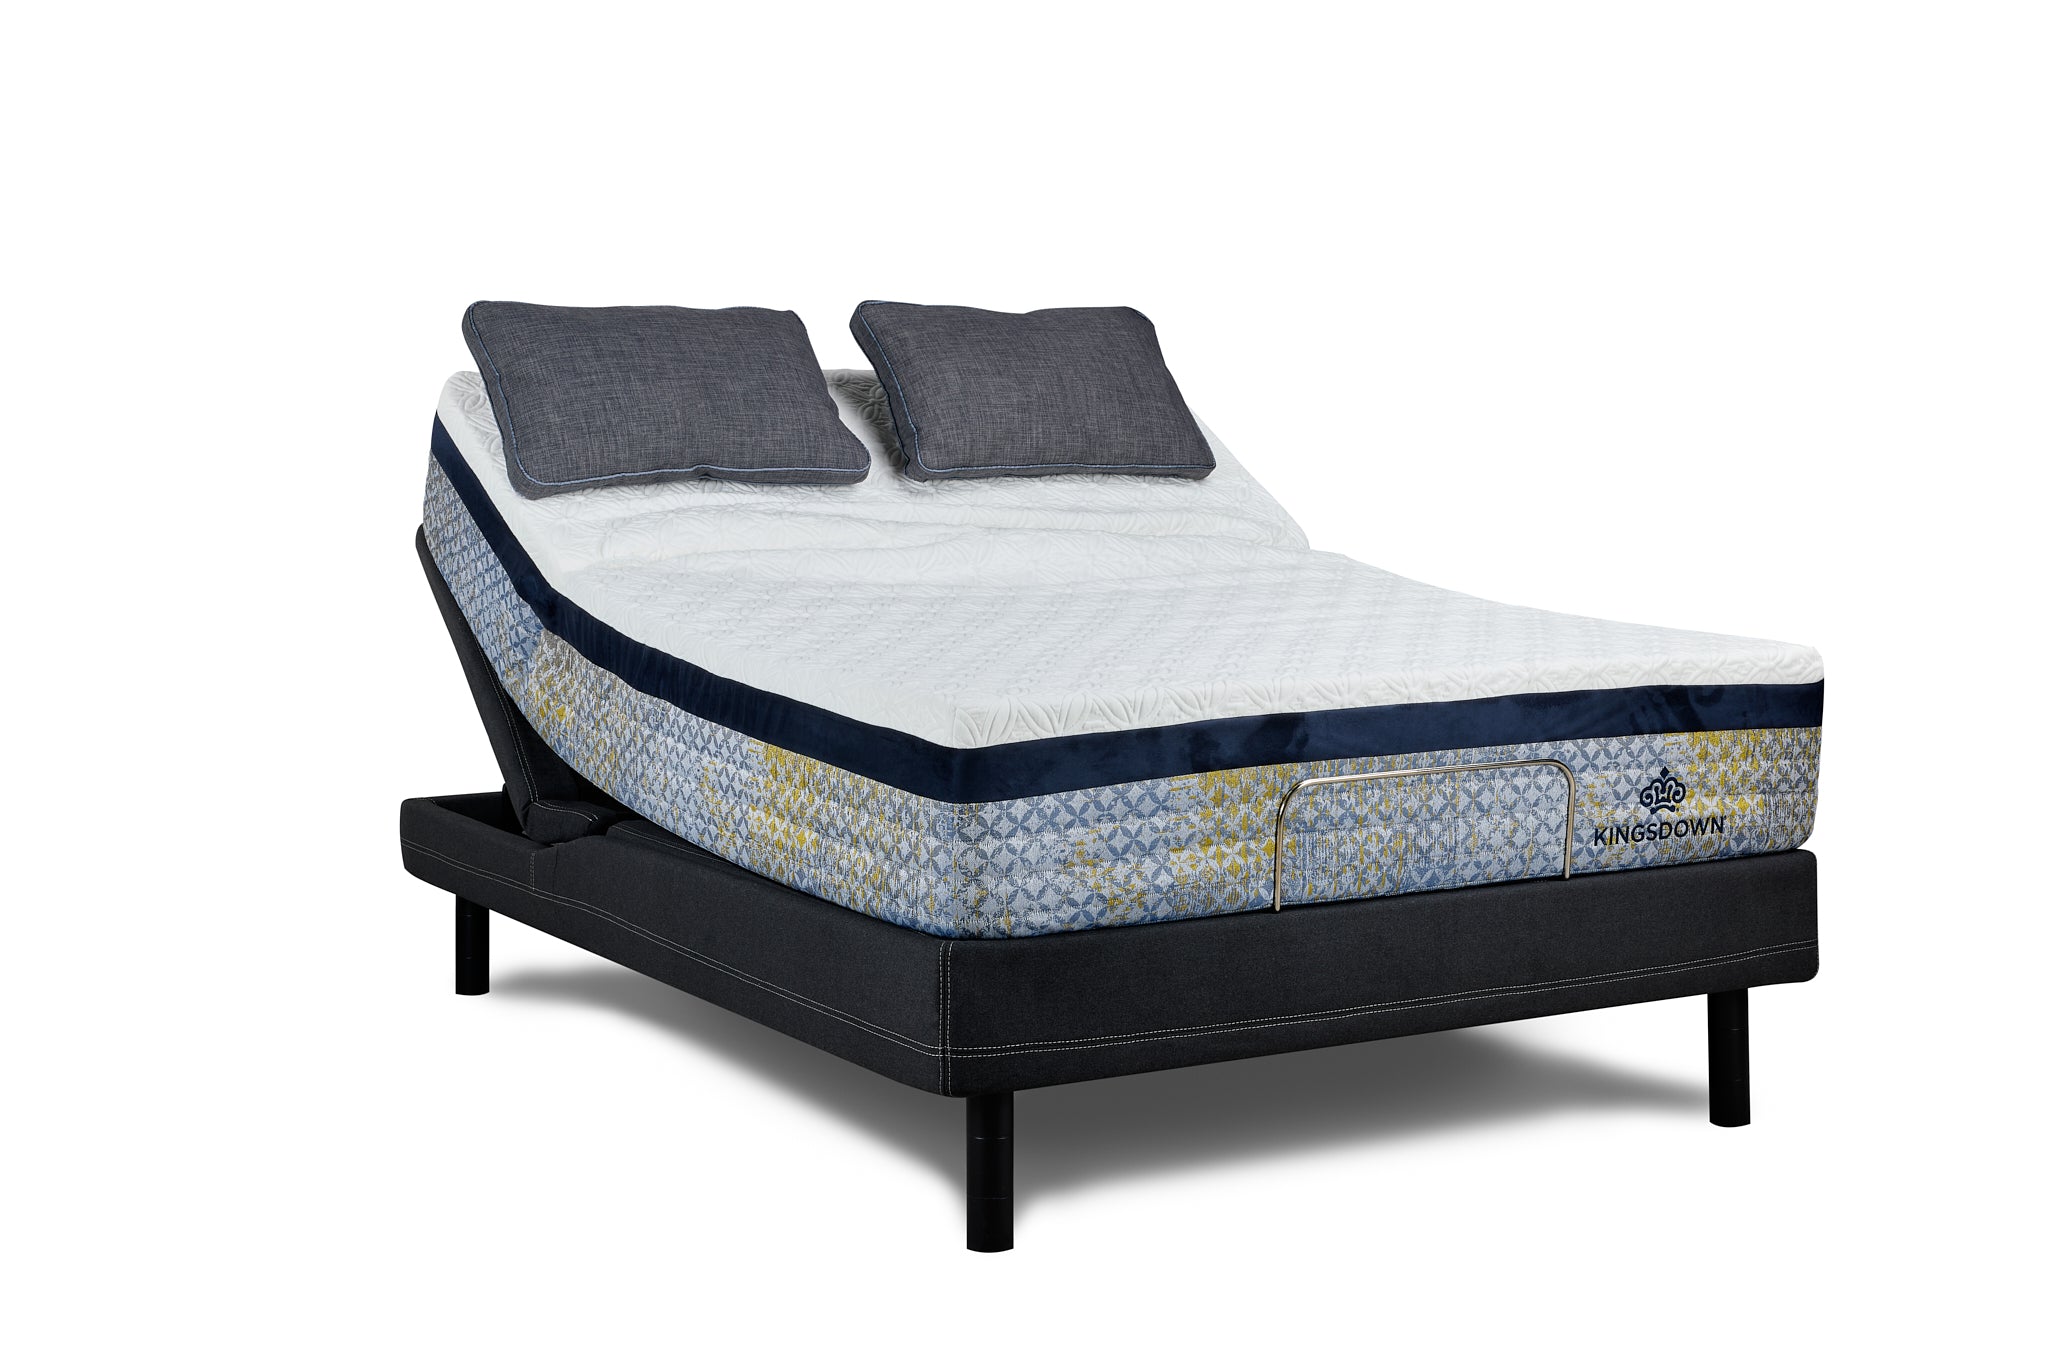 Kingsdown Empress Full Adjustable Bed Package